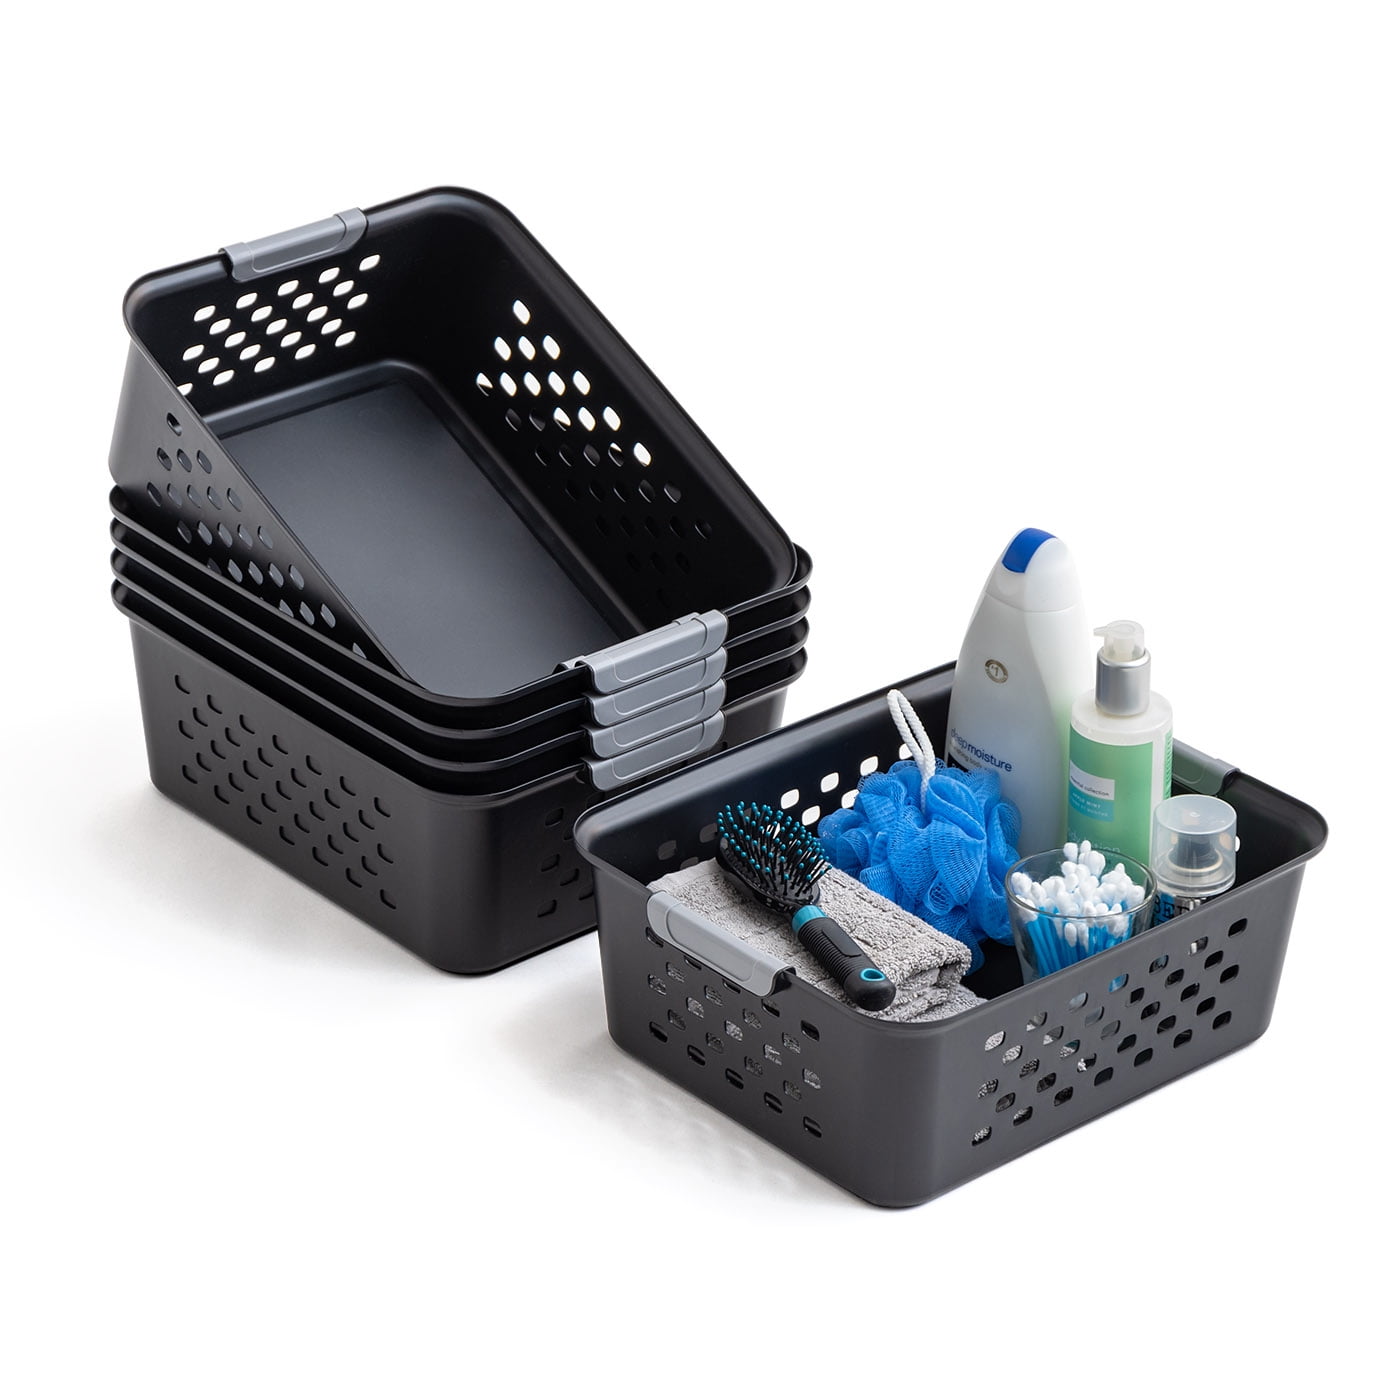 Yesland 6 Pack Plastic Storage Basket Black Basket / Organizer / Bin with Handles for Home Office Closet